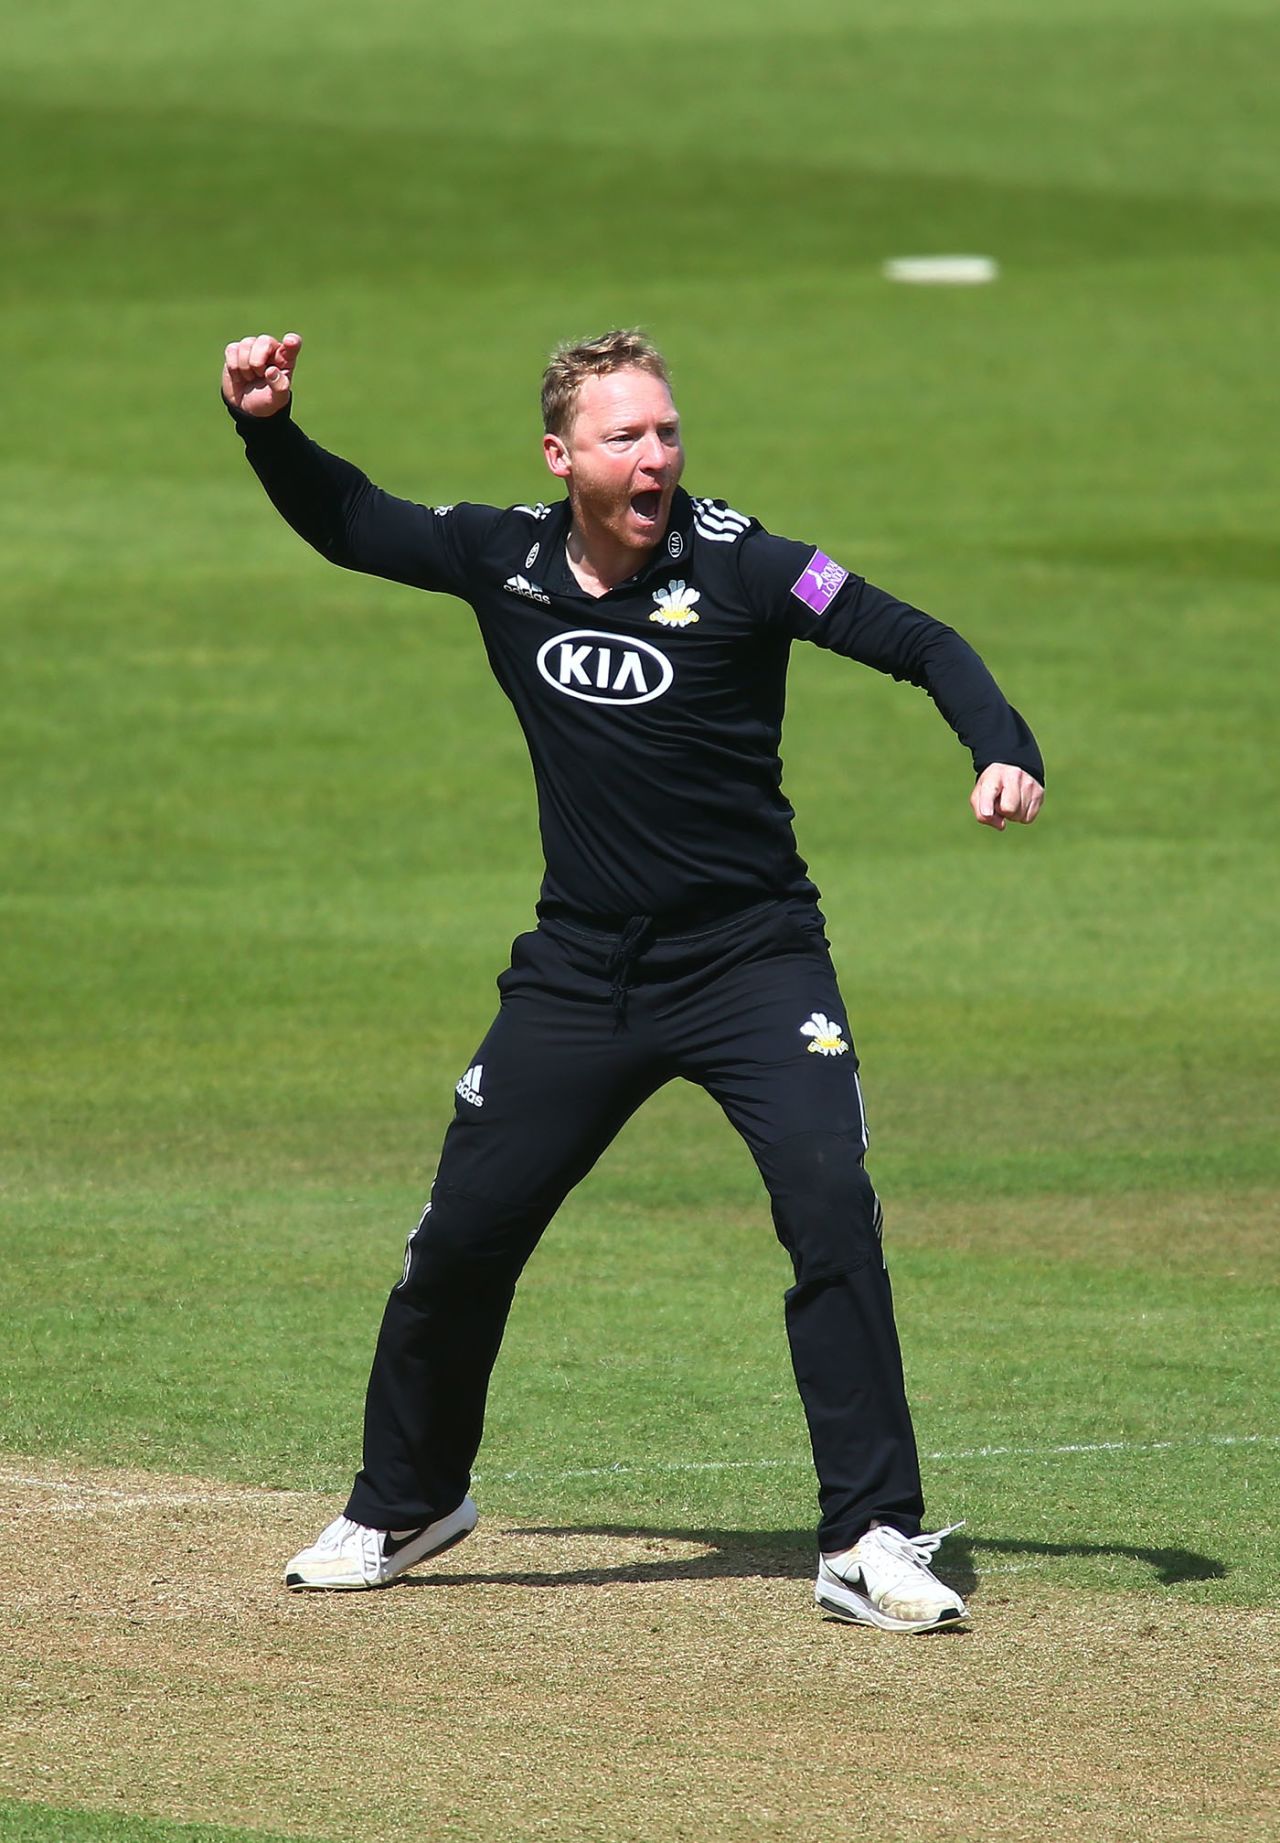 Gareth Batty celebrates dismissing Ross Taylor, Surrey v Middlesex, The Oval, April 25, 2019